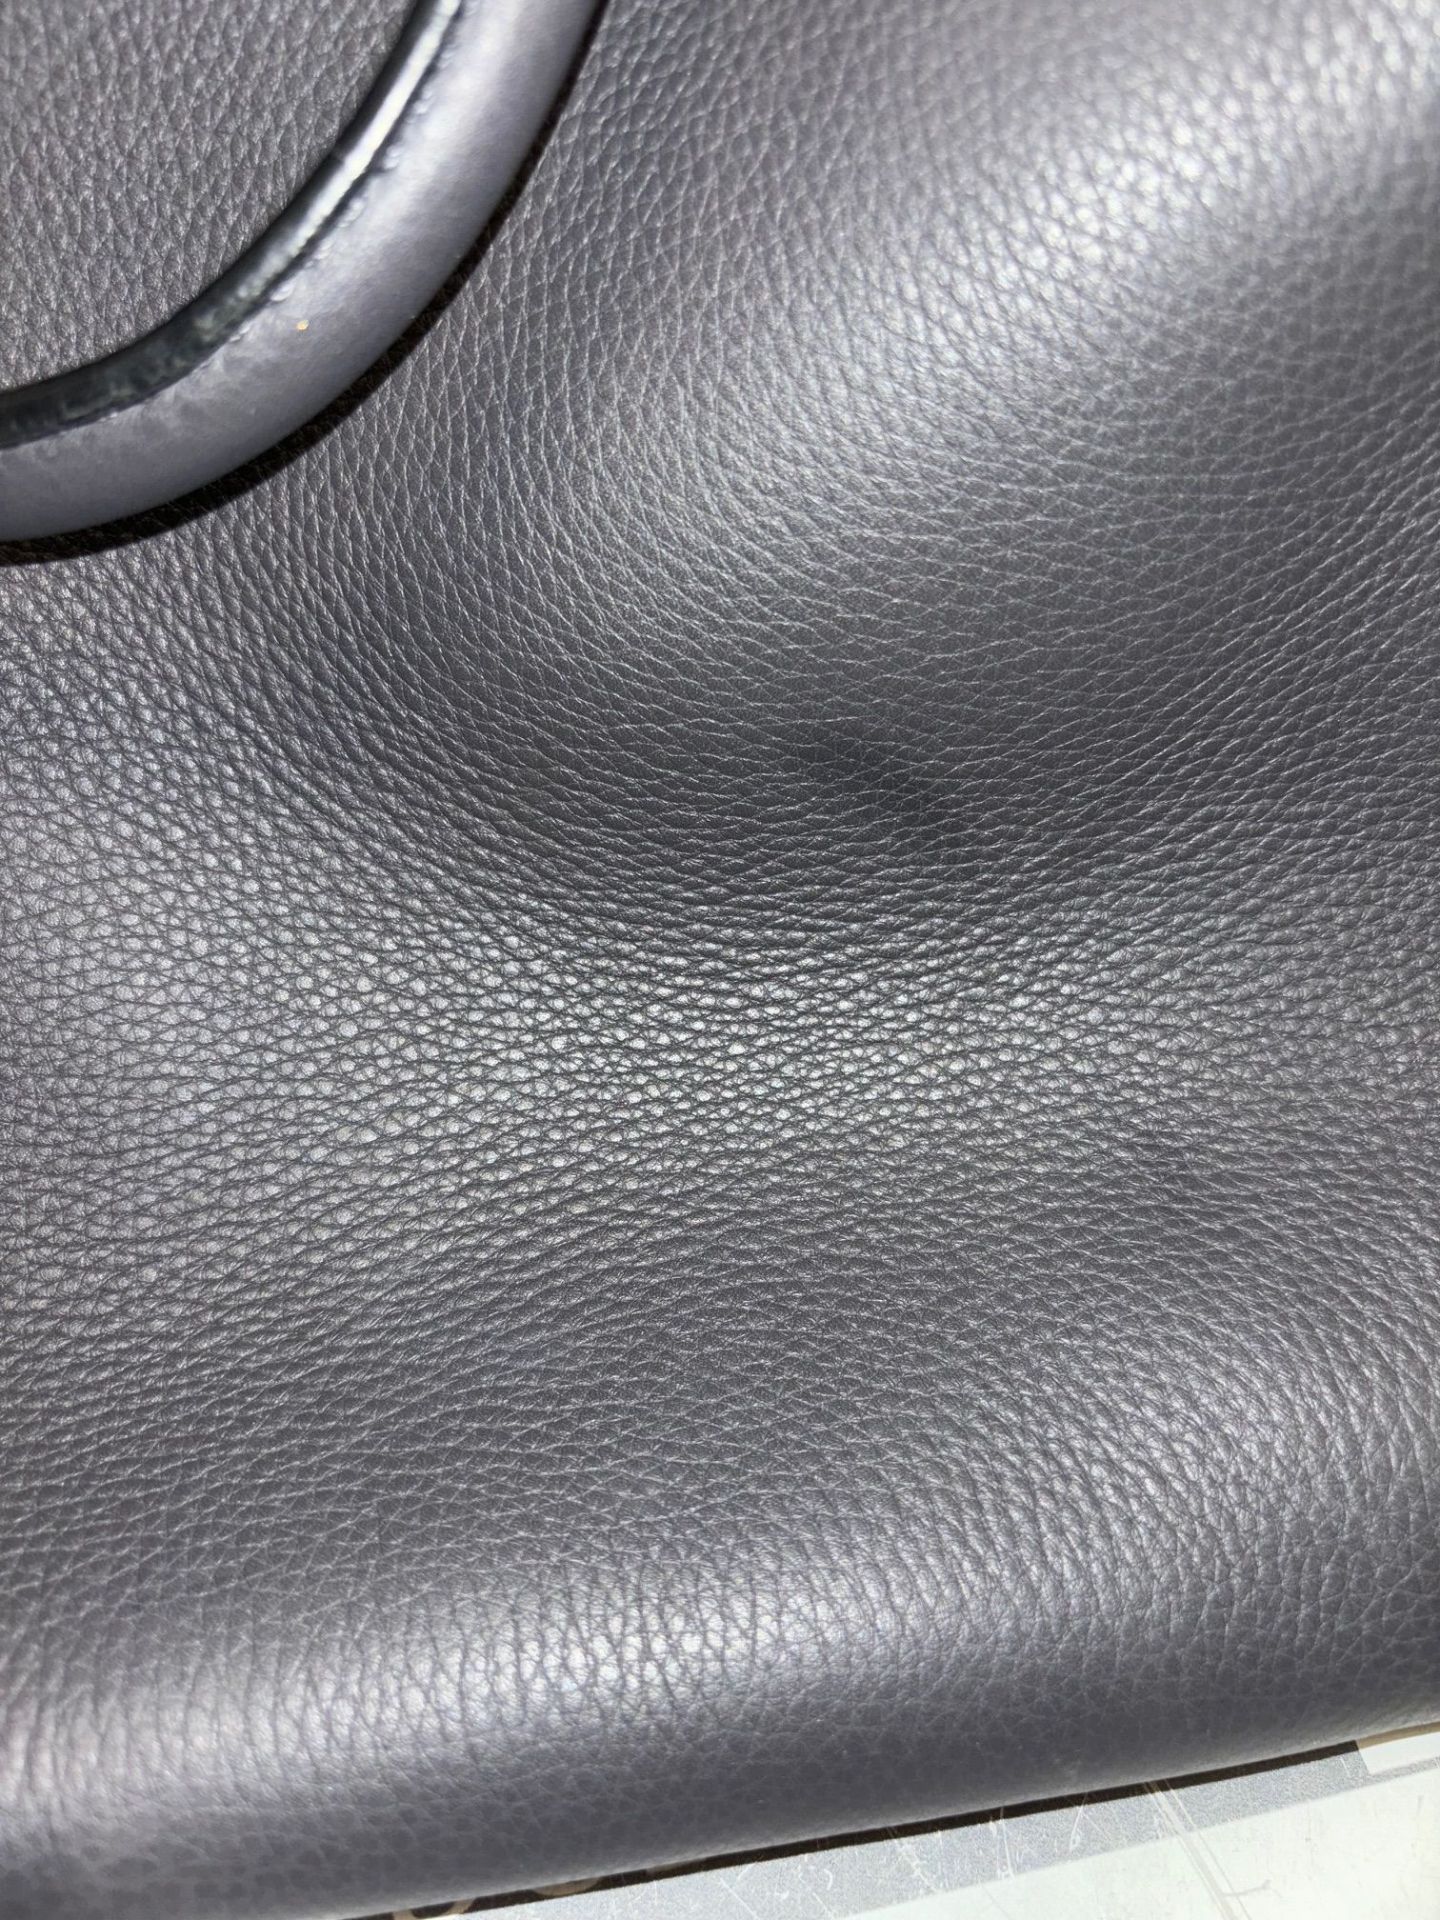 Genuine Burberry The Medium leather Belt Bag. Charcoal grey and baby blue. - Bild 6 aus 13